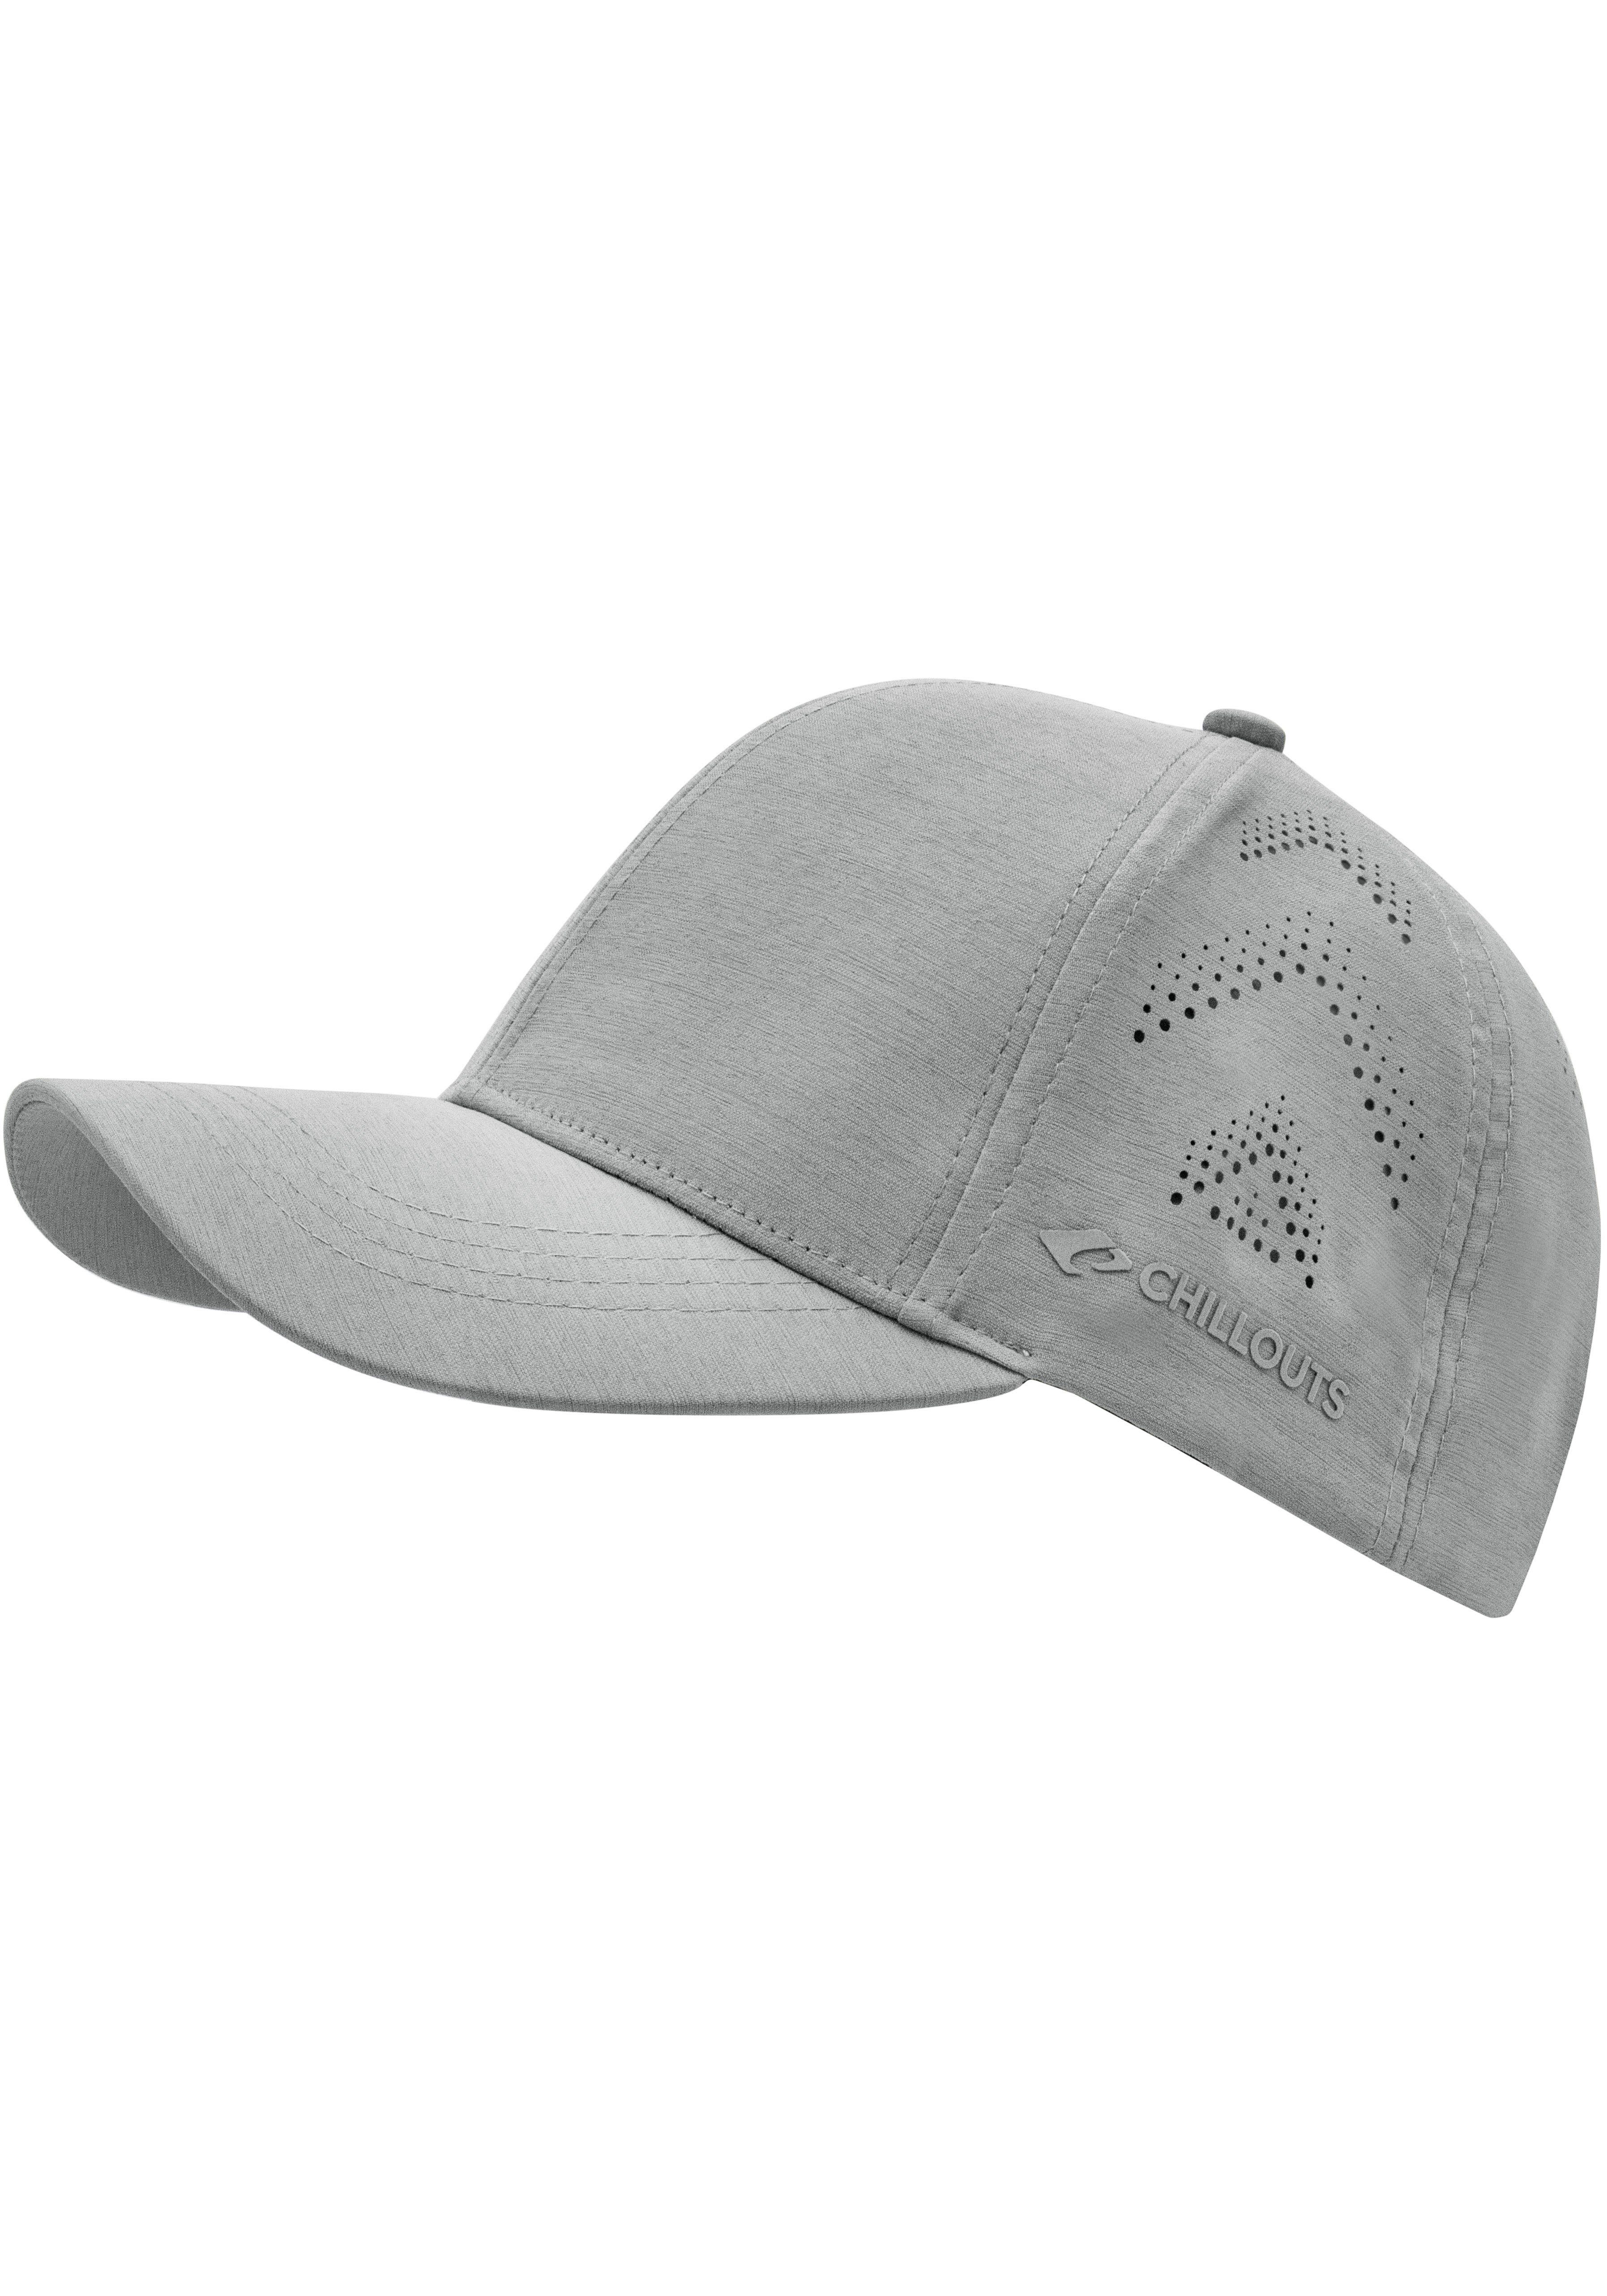 hellgrau mit Baseball Philadelphia UPF50+ Hat, chillouts Cap Cap Klettverschluß,